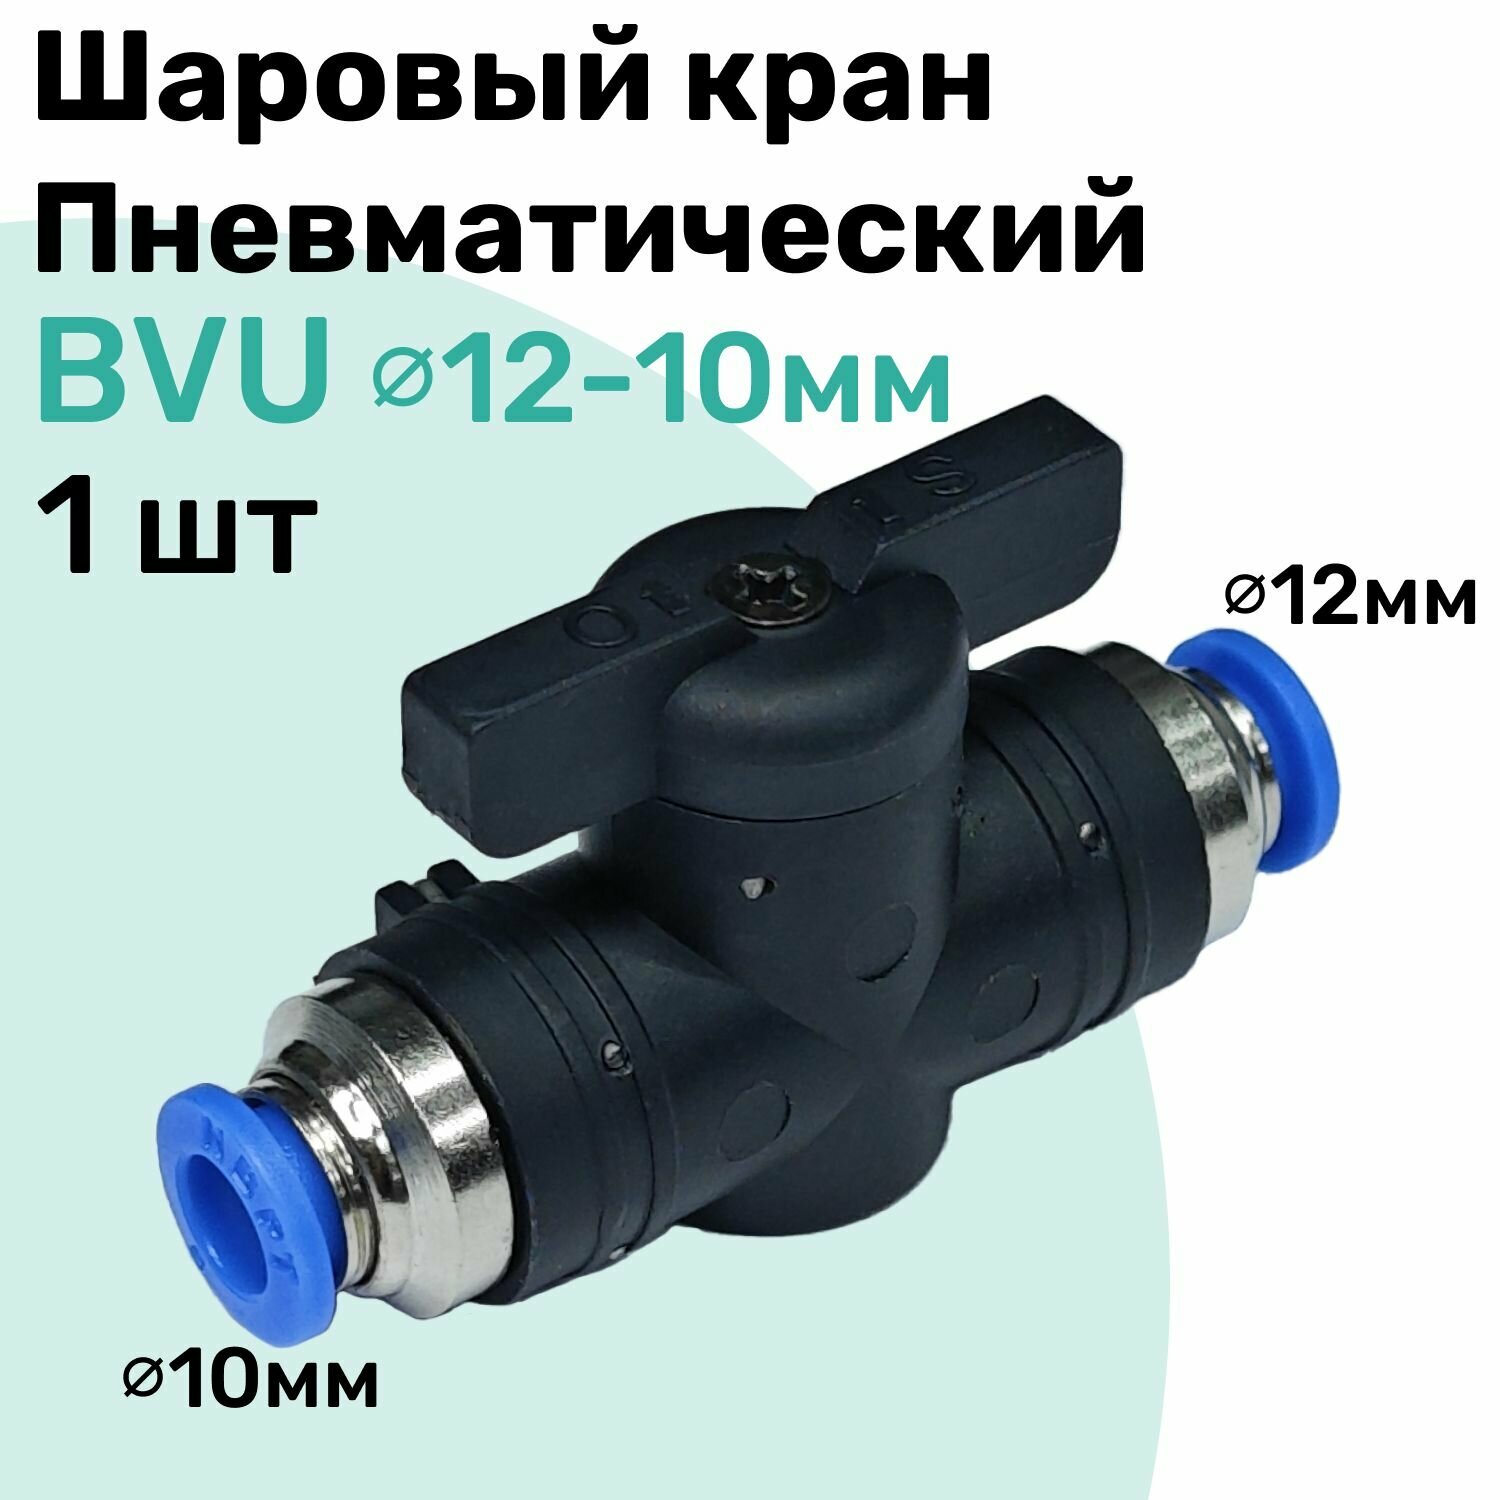 Шаровый кран пневматический BVU 12-10 мм, Пневмофитинг NBPT